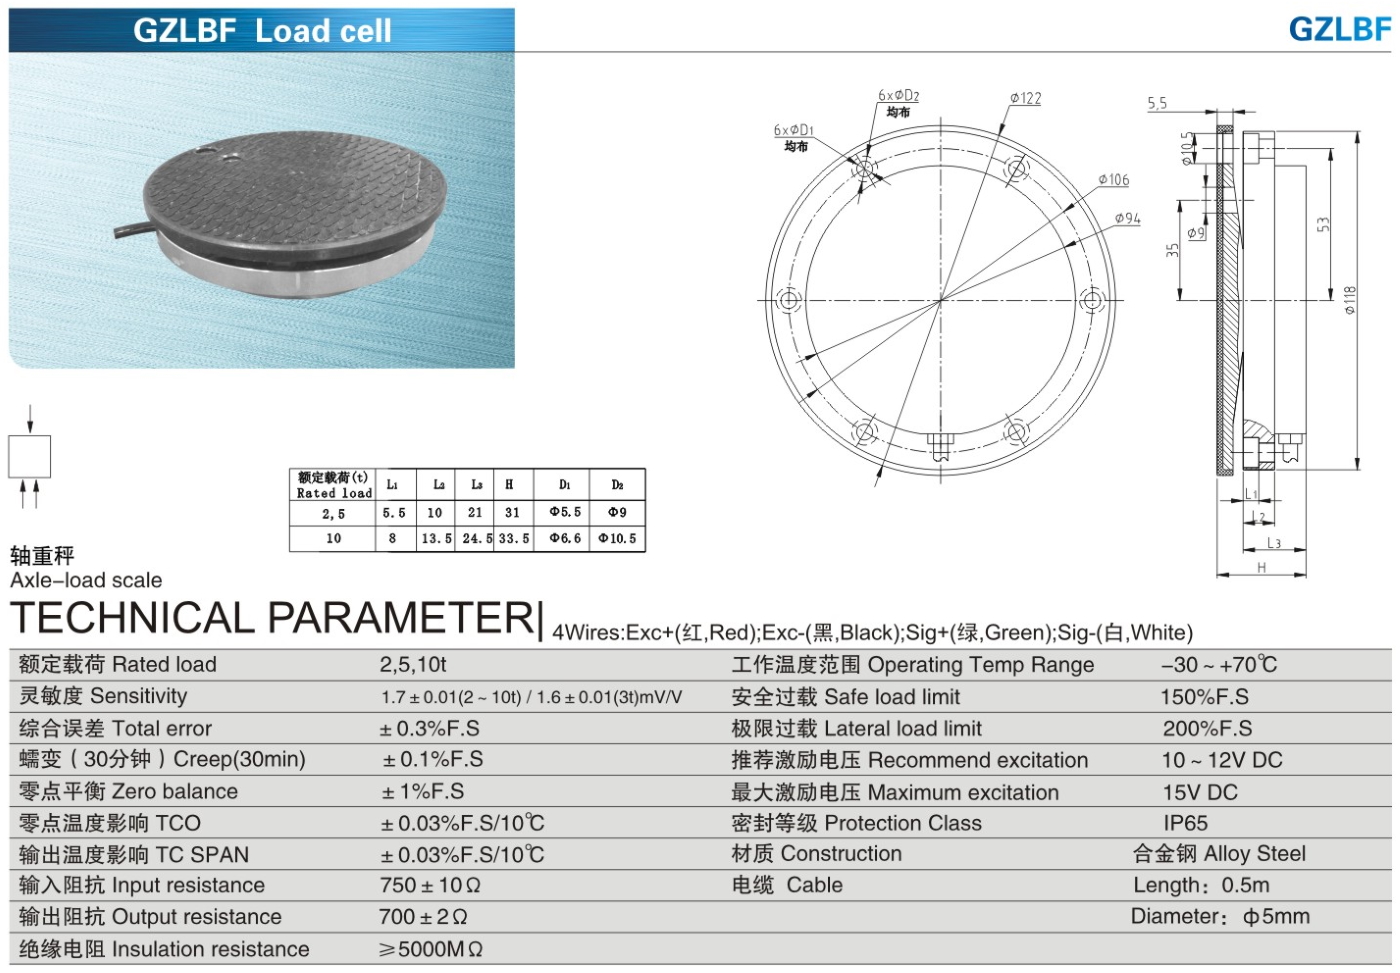 img/loadcell-images/bending-ring-road-weighing/KELI_GZLBF_Loadcell-TTM_Teknoloji.jpg